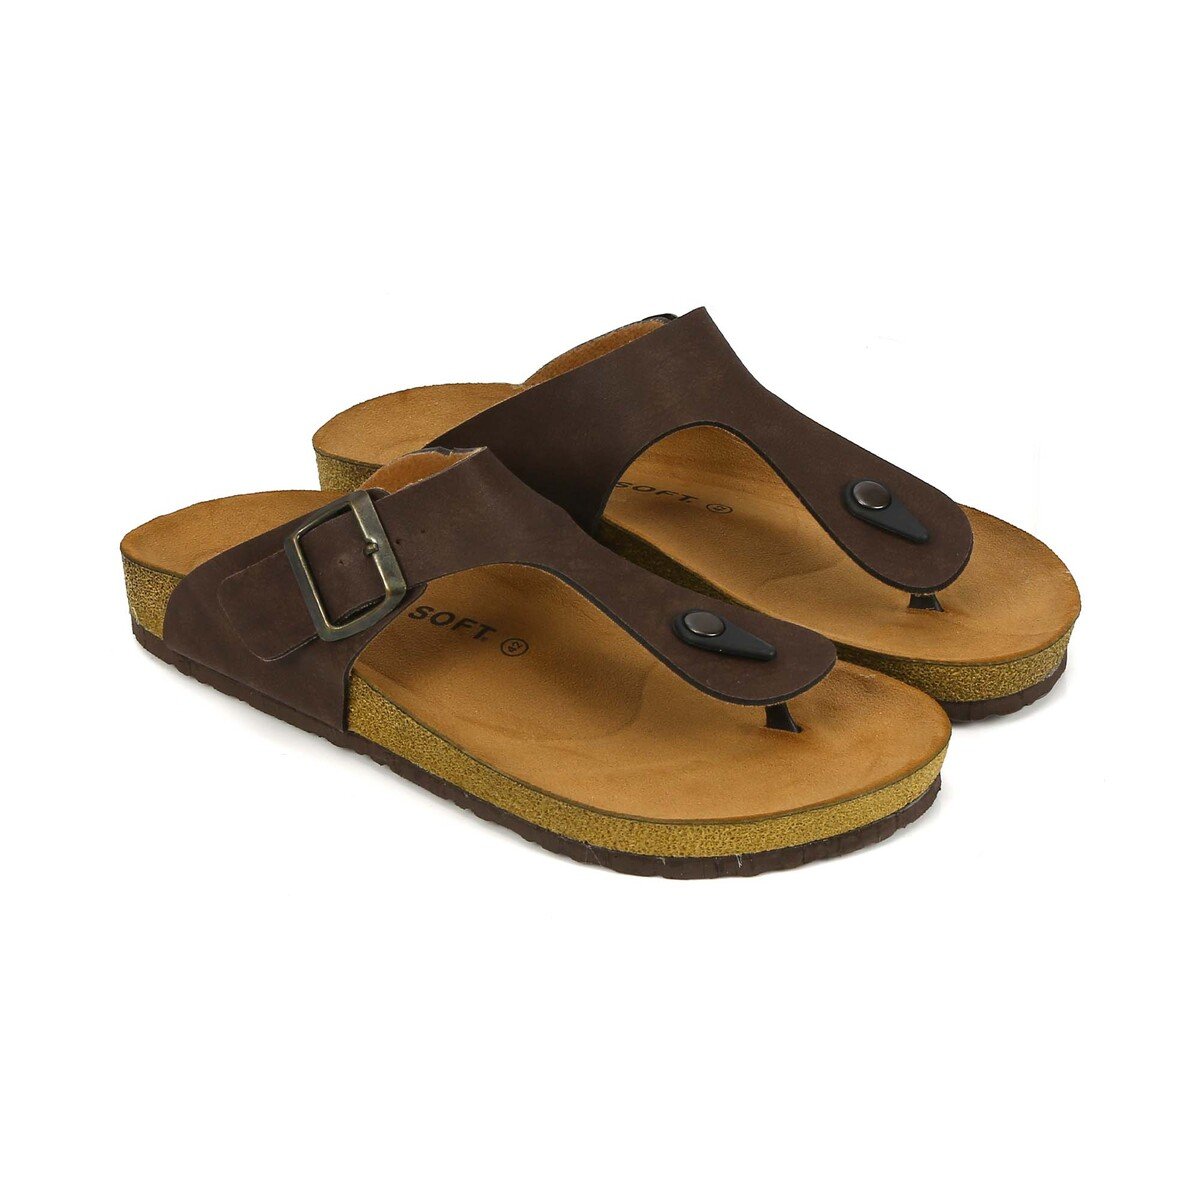 Fly Soft Men's Sandals S903-001 Brown, 40